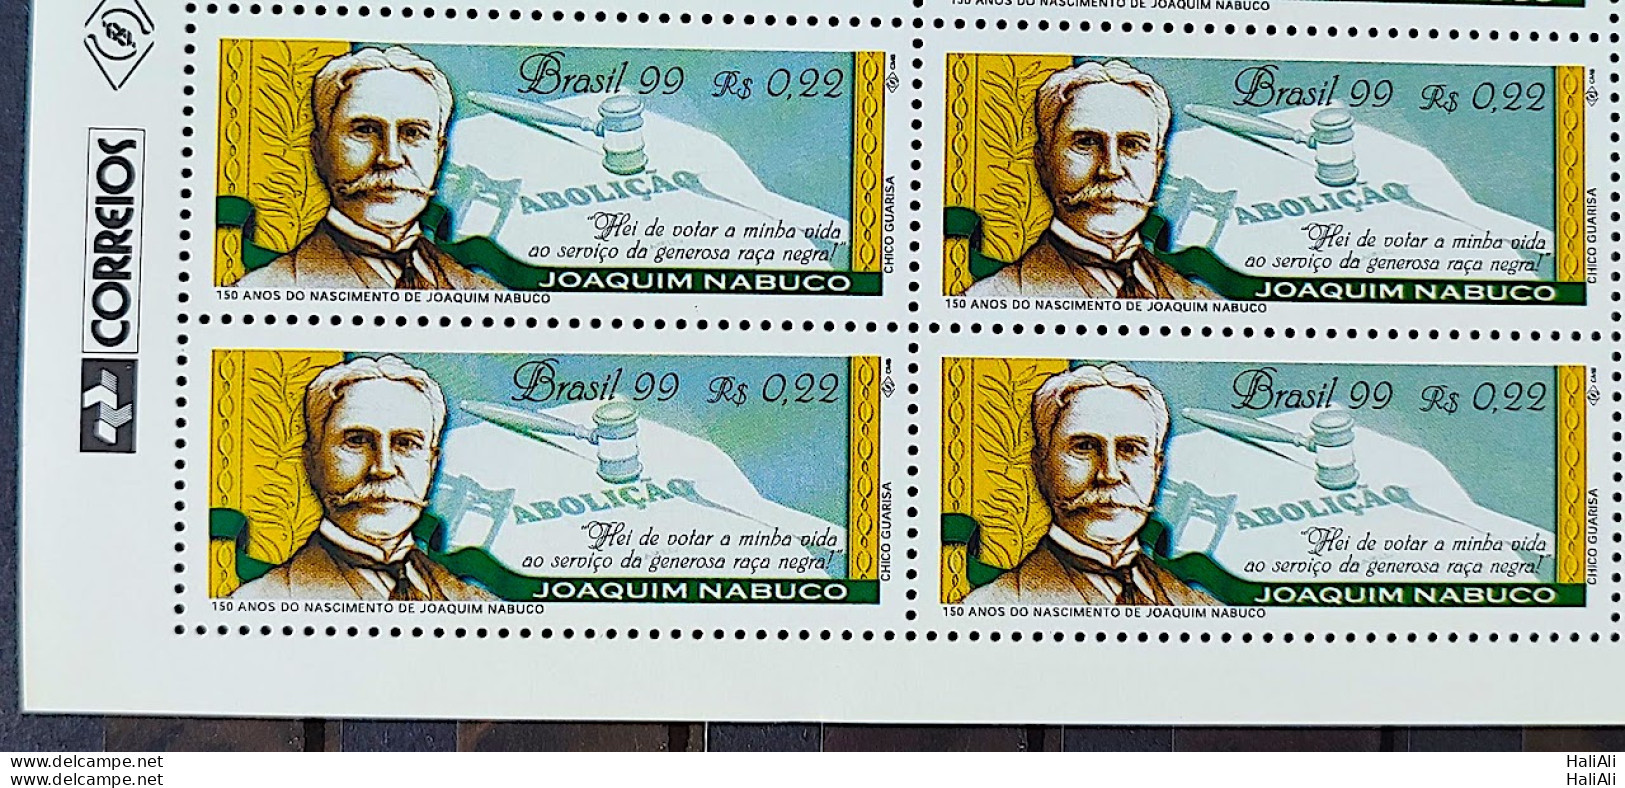 C 2210 Brazil Stamp Joaquim Nabuco Diplomacy Law Justic 1999 Block Of 4 Vignette Post - Unused Stamps